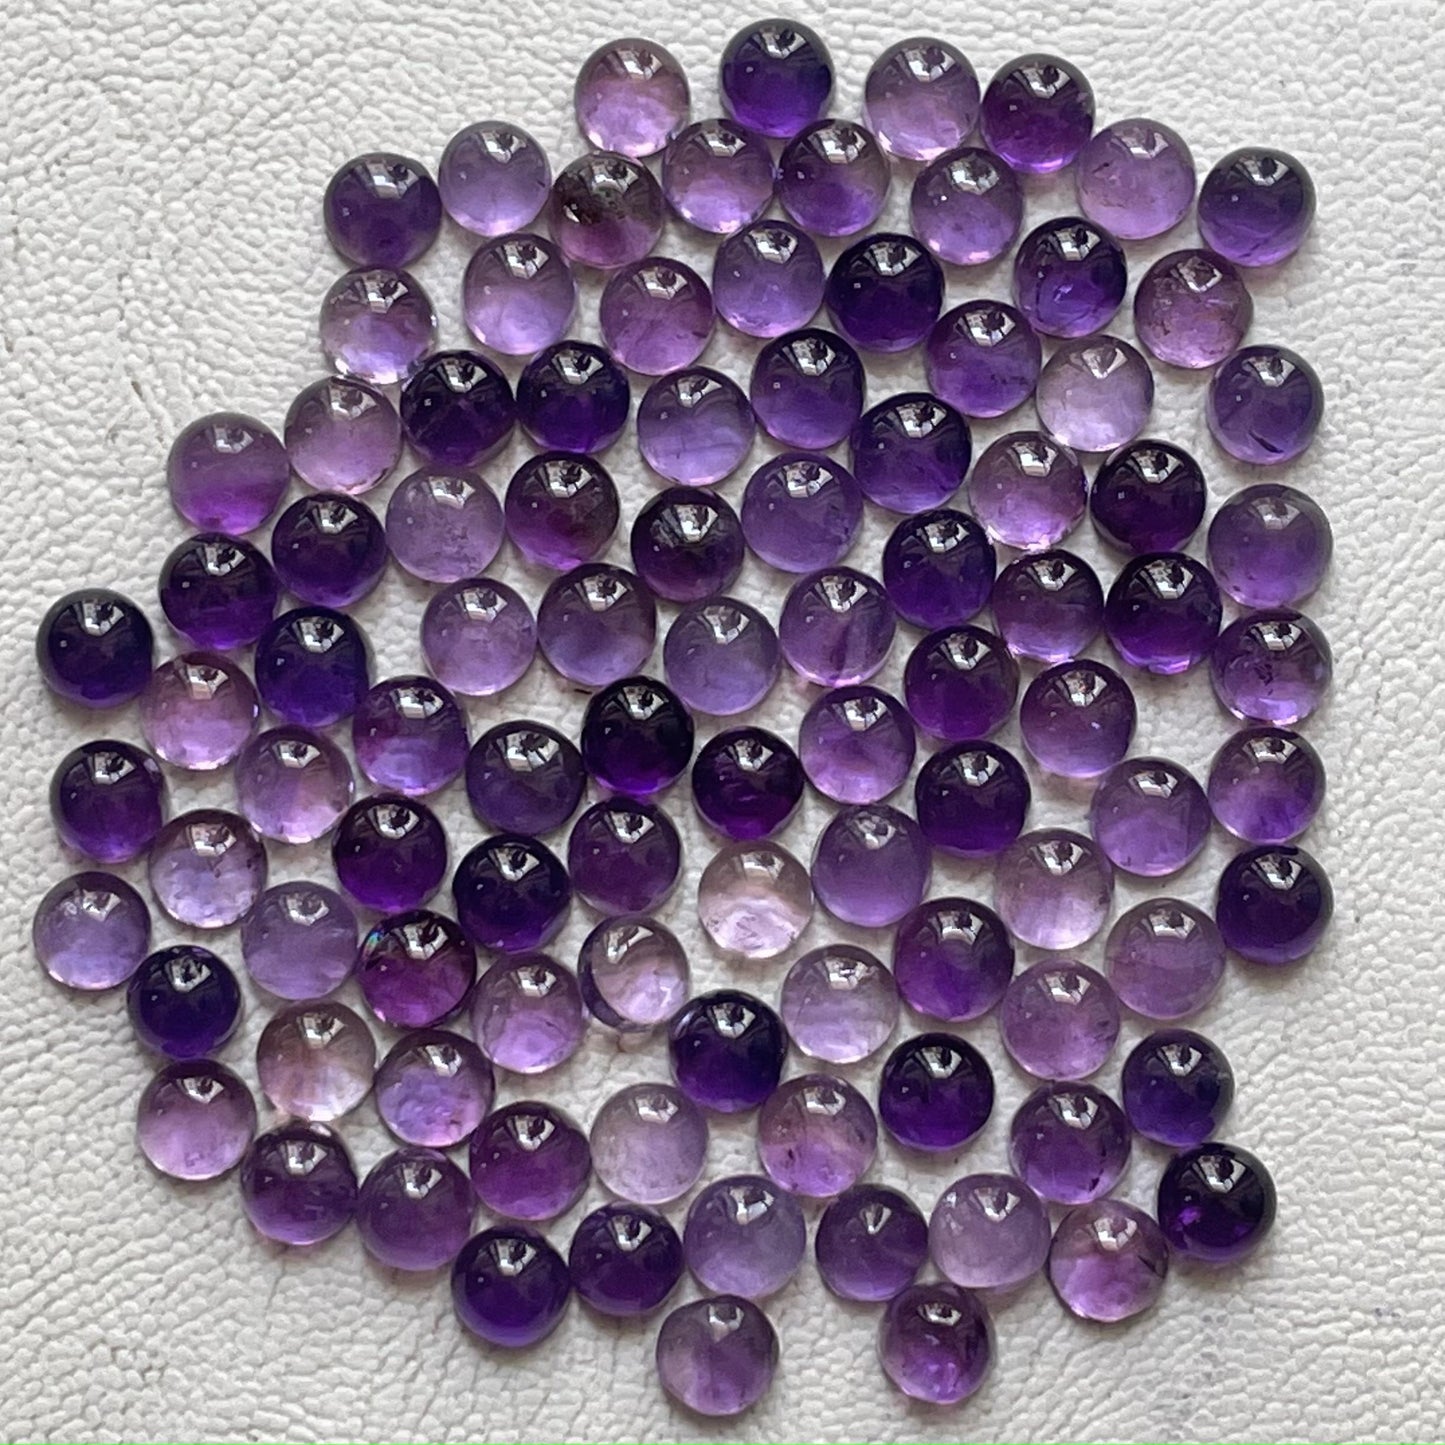 Beautiful Purple Amethyst 5 mm Round Cabochon (Natural)